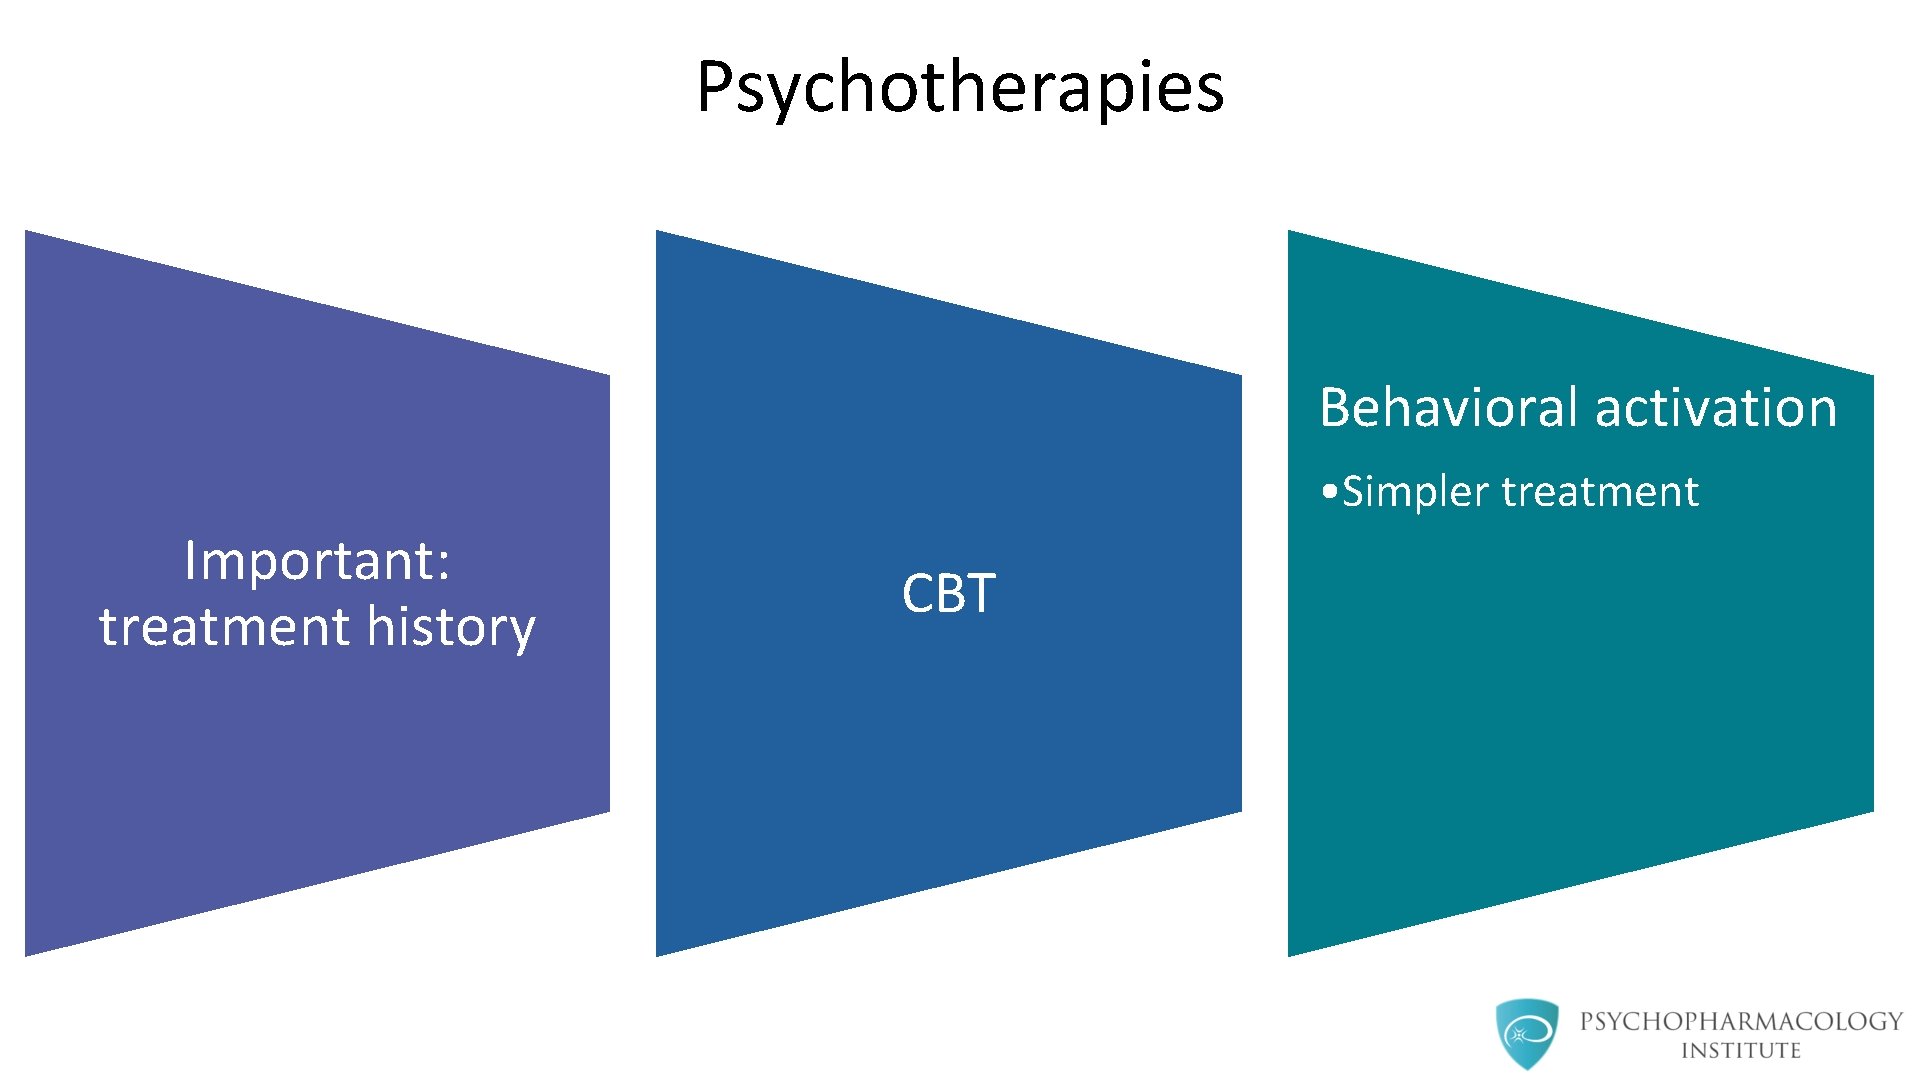 Psychotherapies Behavioral activation • Simpler treatment Important: treatment history CBT 